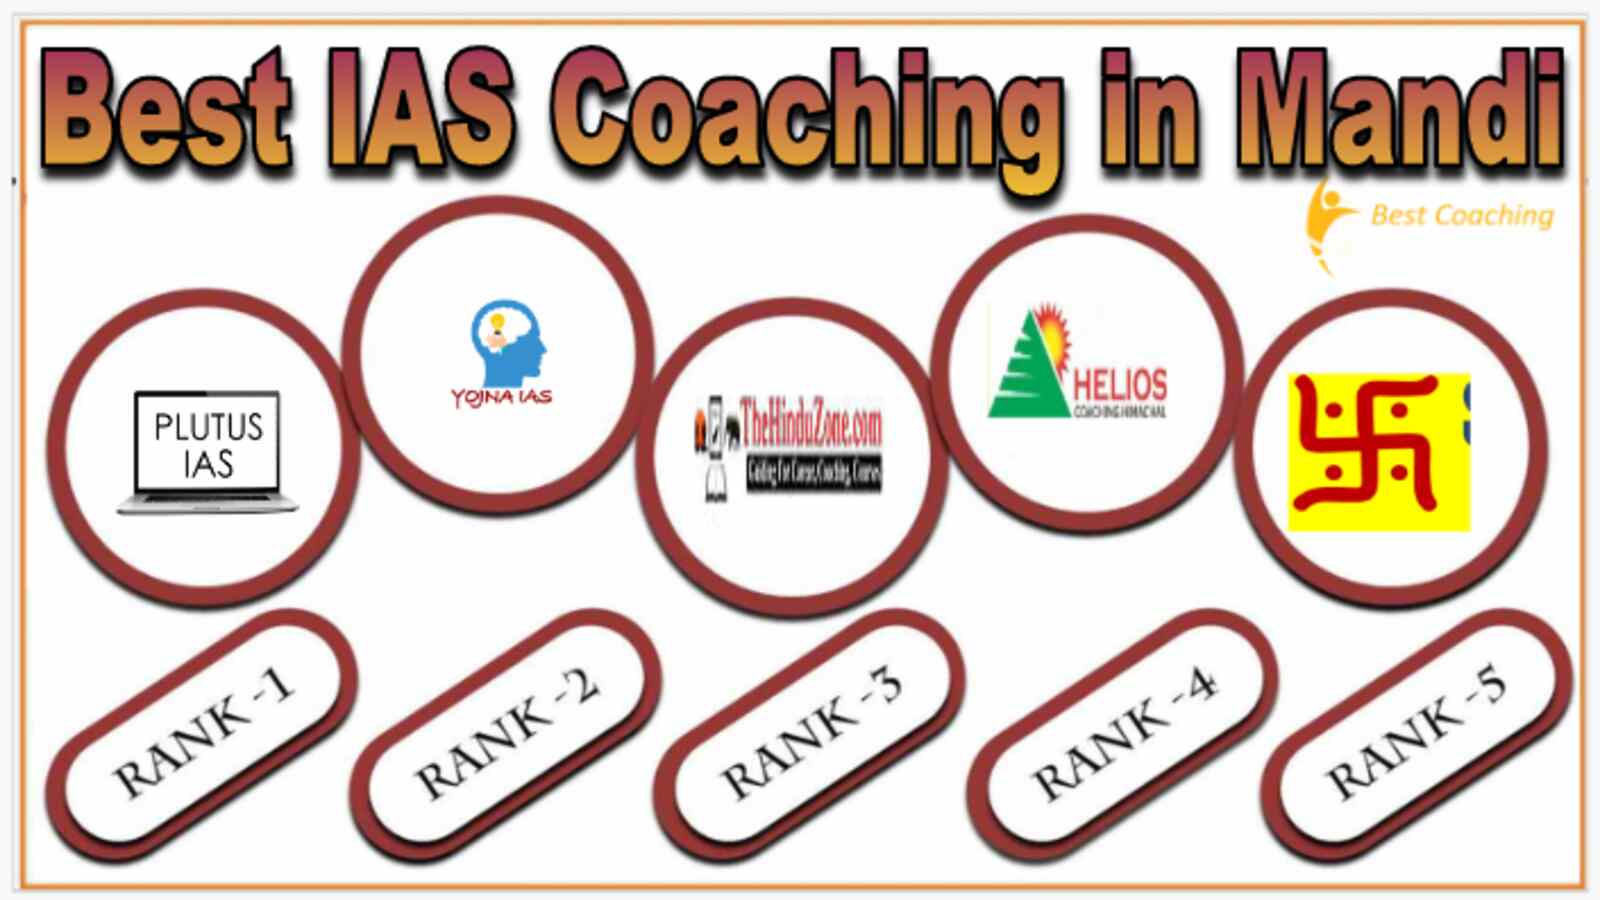 Best IAS Coaching in Mandi